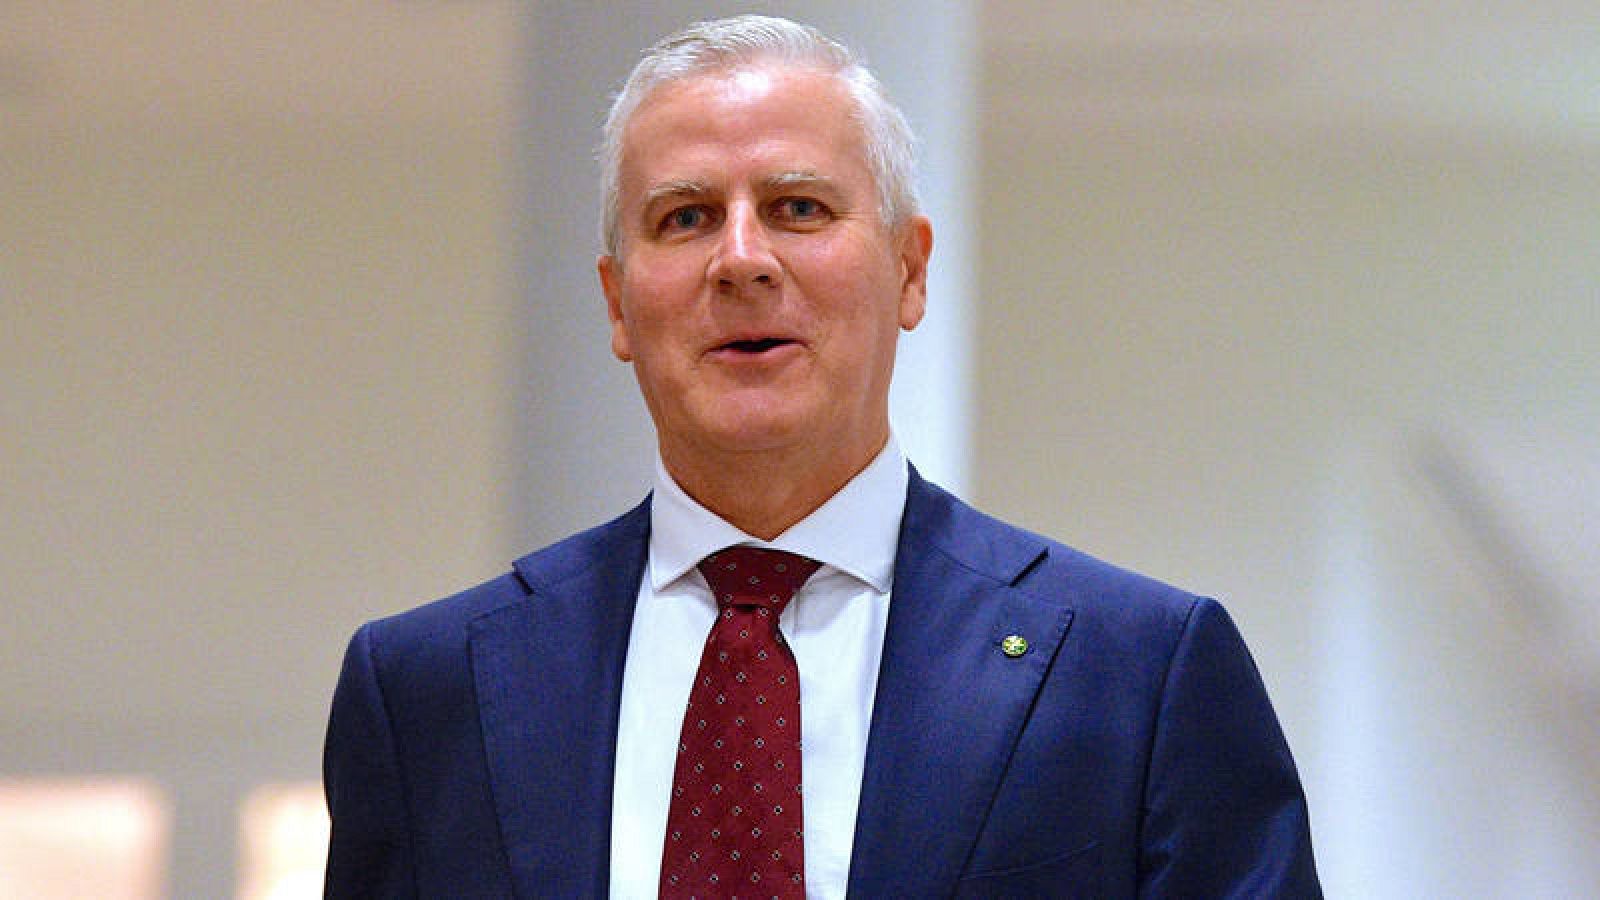 McCormack ha sido nombrado nuevo viceprimer ministro de Australia